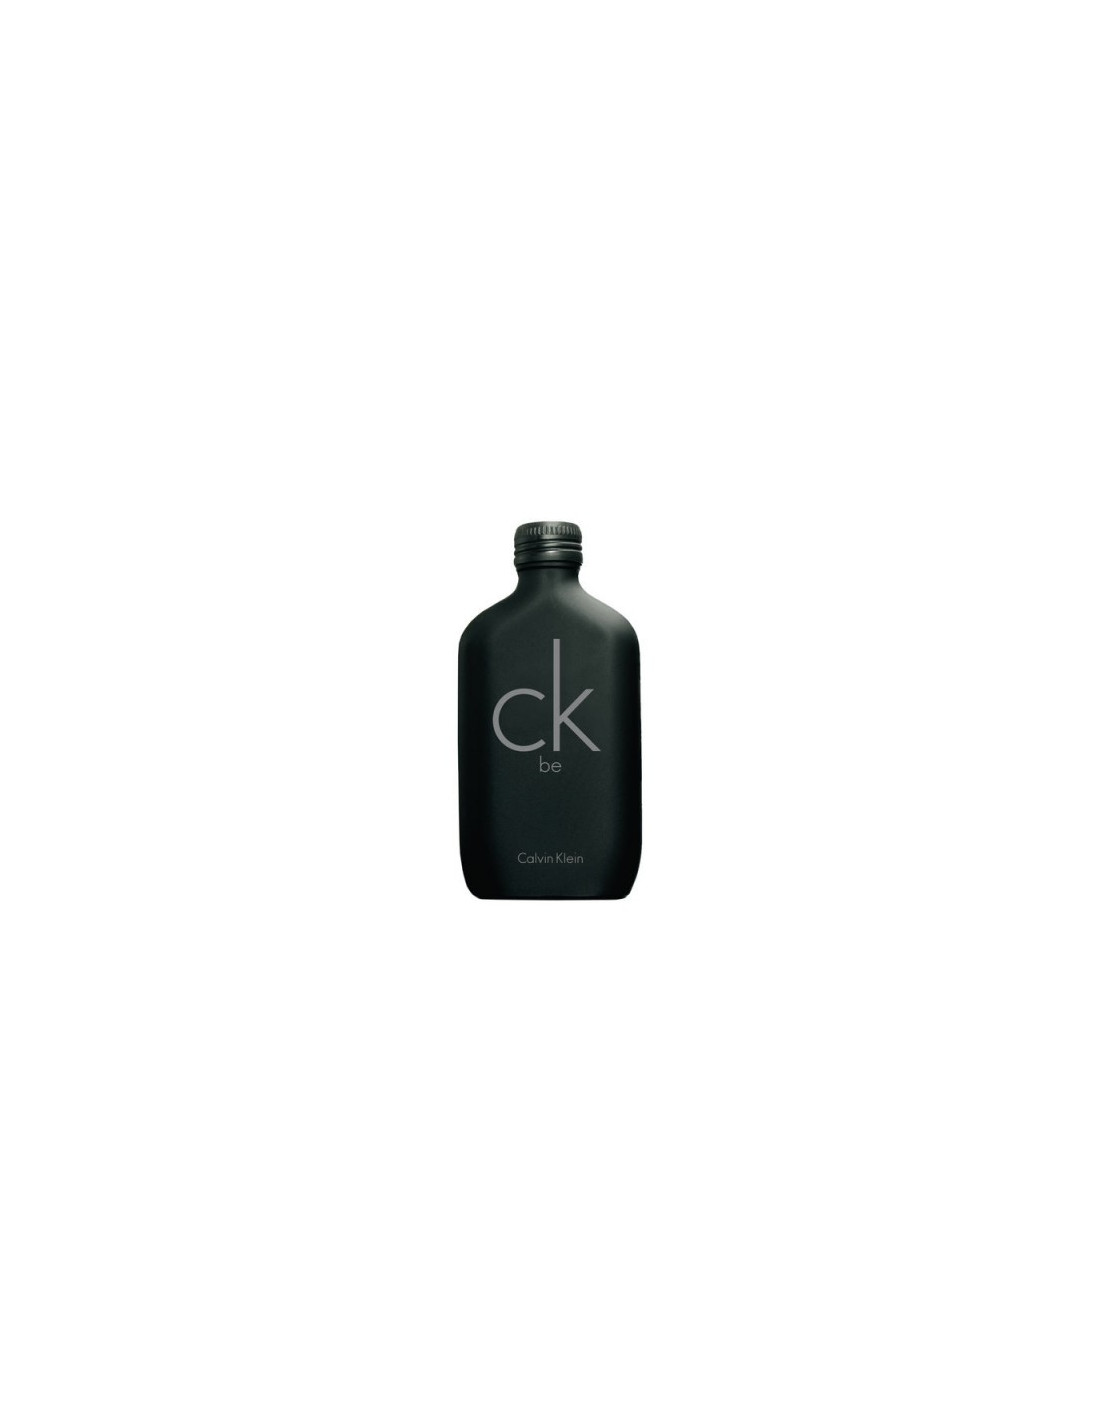 Calvin Klein Ck Be Eau de toilette spray 200 ml unisex